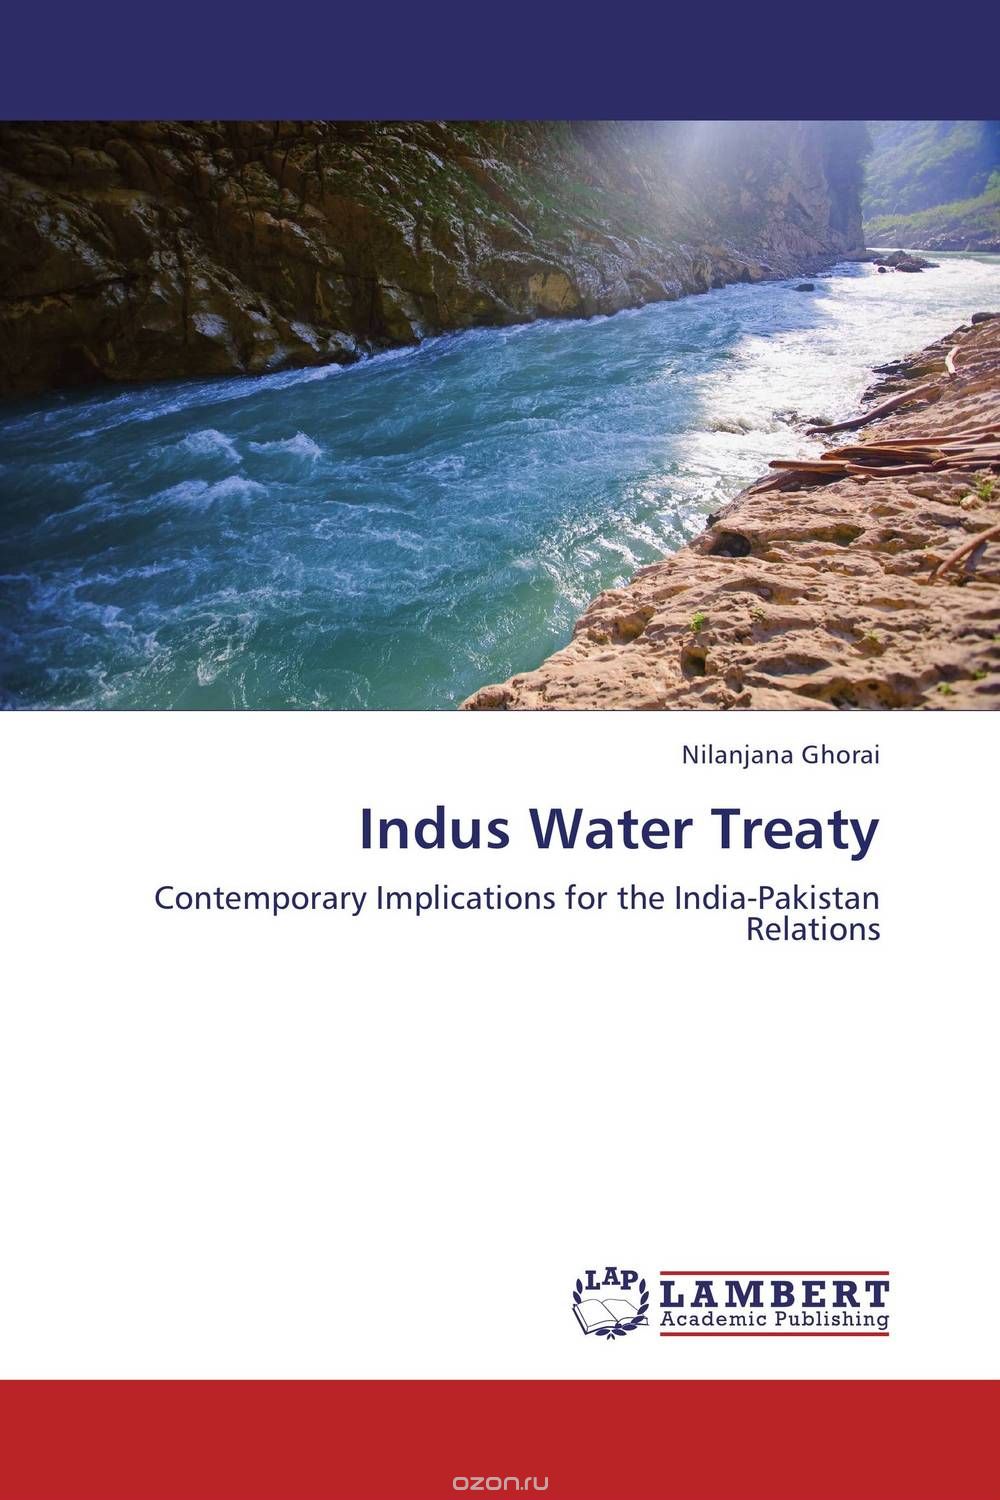 Скачать книгу "Indus Water Treaty"